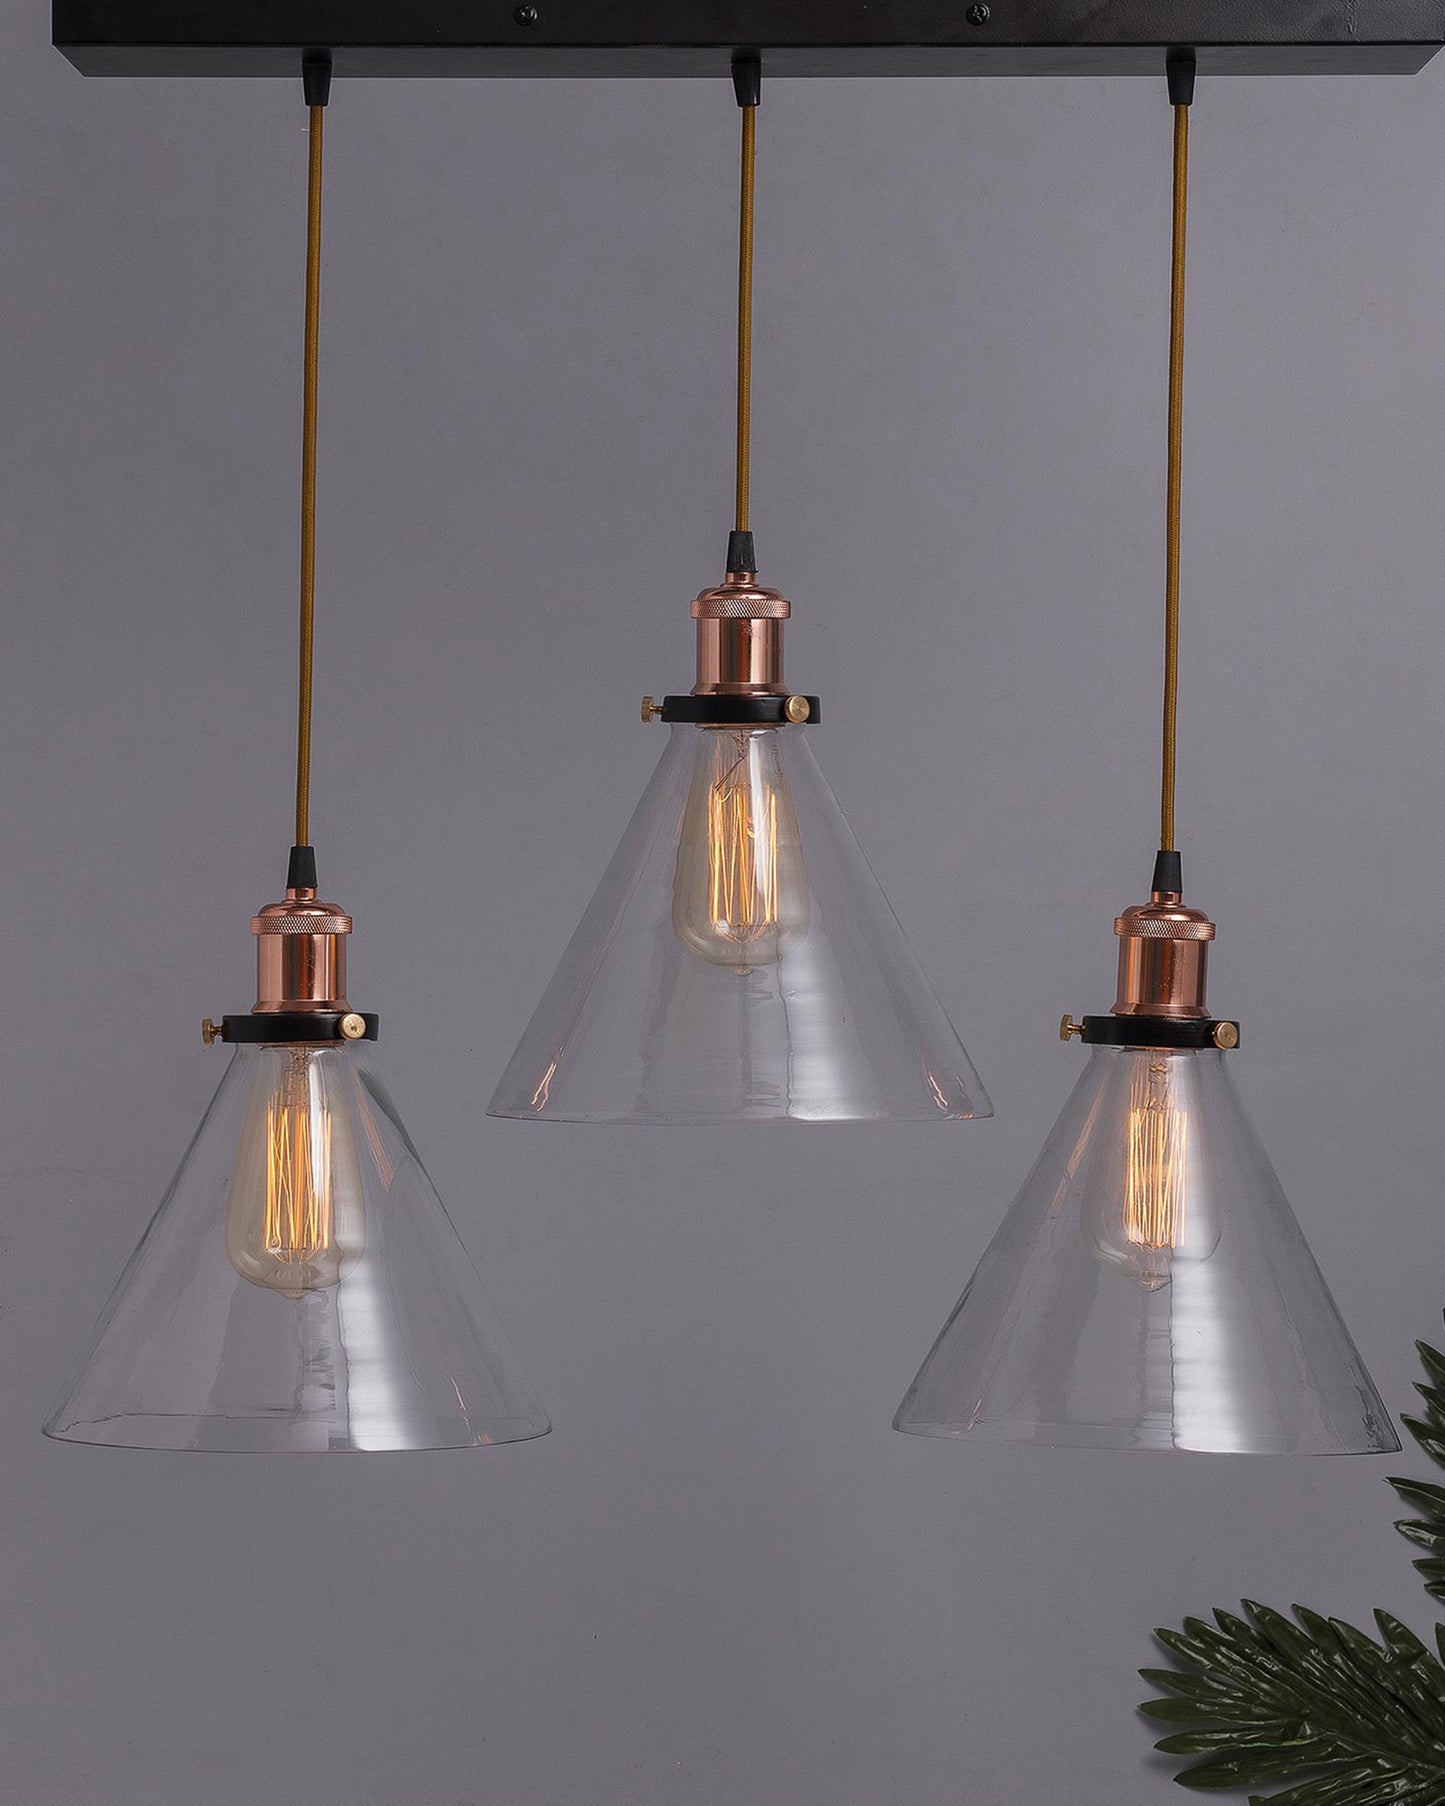 3-Lights Linear Cluster Chandelier Modern Glass Cone Shaped Hanging Light, Antique Socket, E27 Holder, Decorative, Black, URBAN Retro, Nordic Style